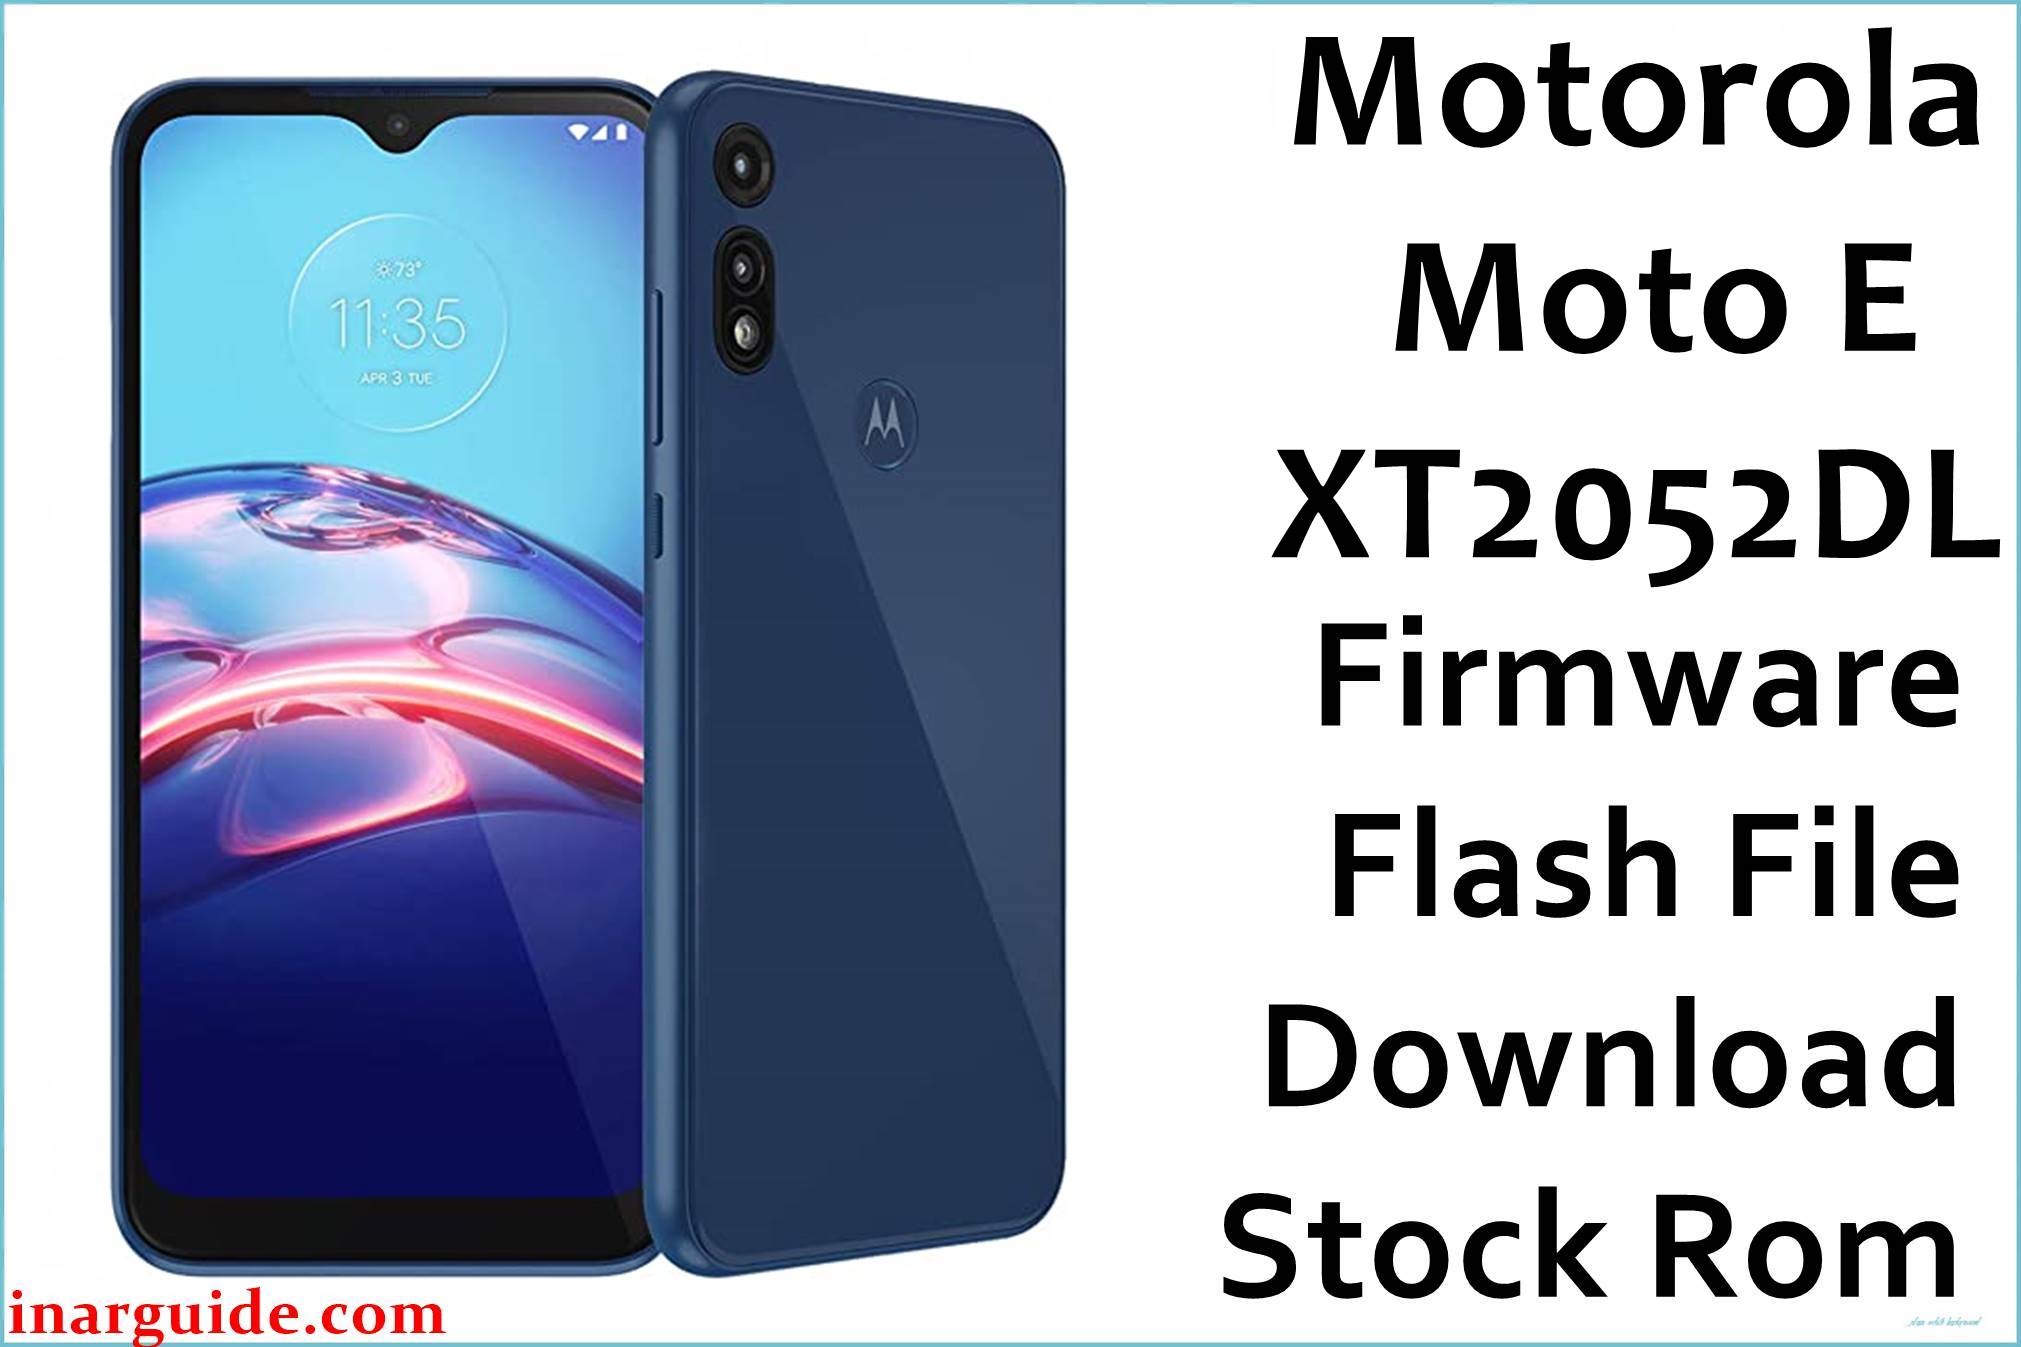 Motorola Moto E XT2052DL